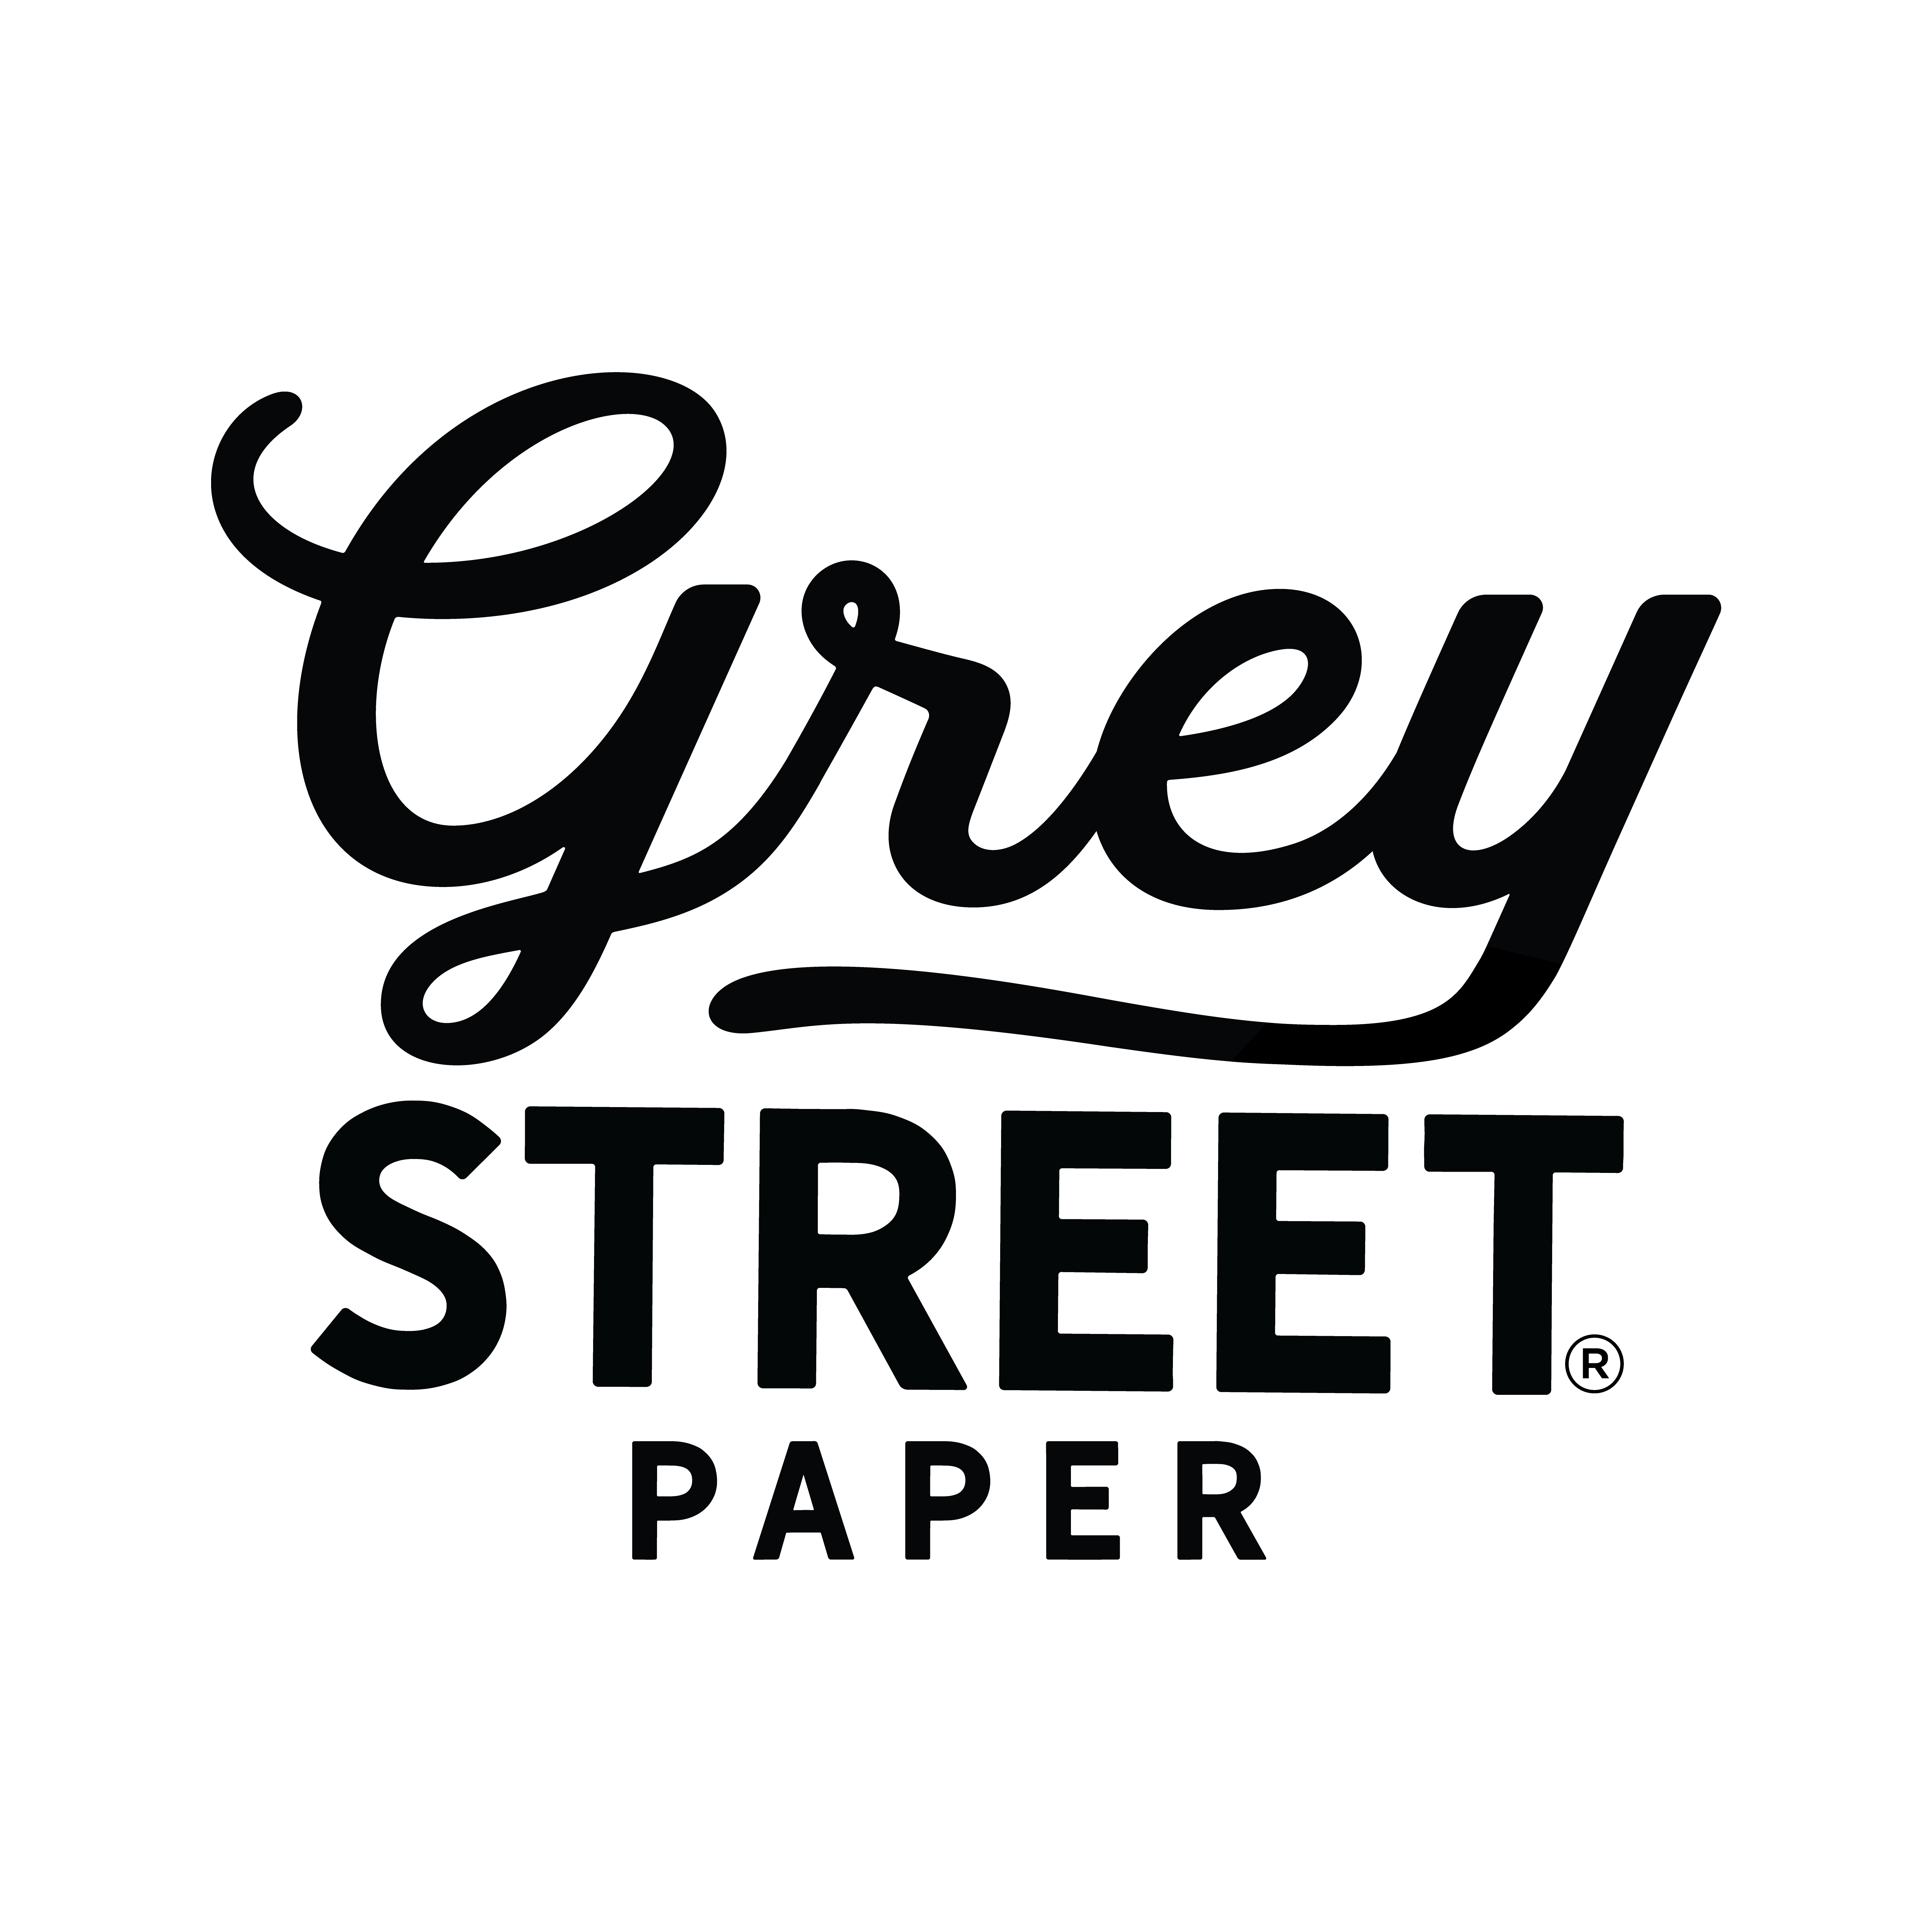 Grey Street Paper logo